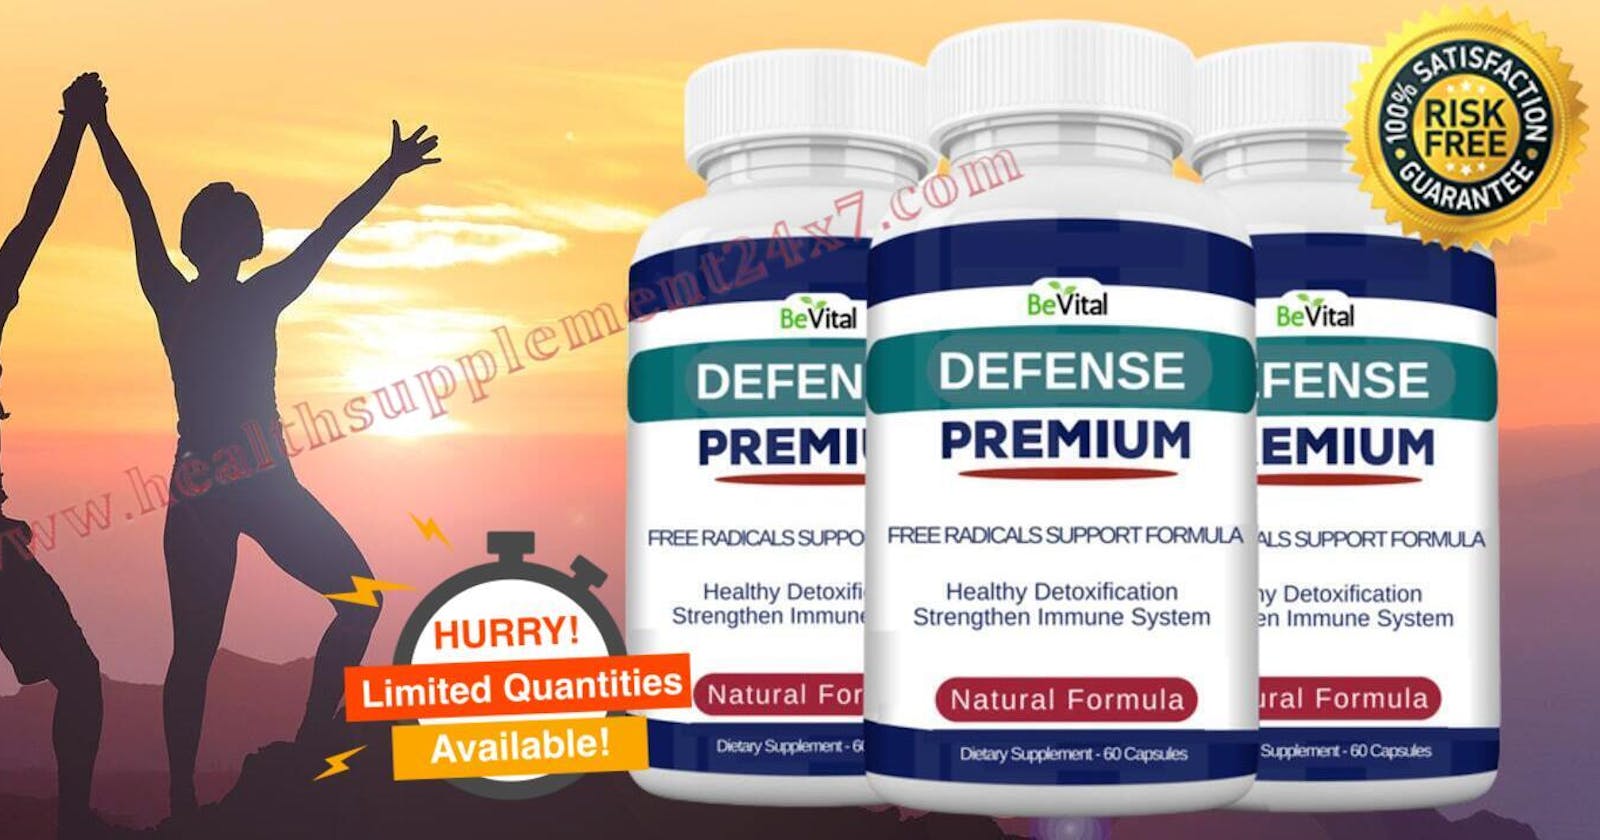 BeVital Defense Premium Anti Aging Supplement Preventing Free Radical Damage [75% Special Offer](Spam Or Legit)